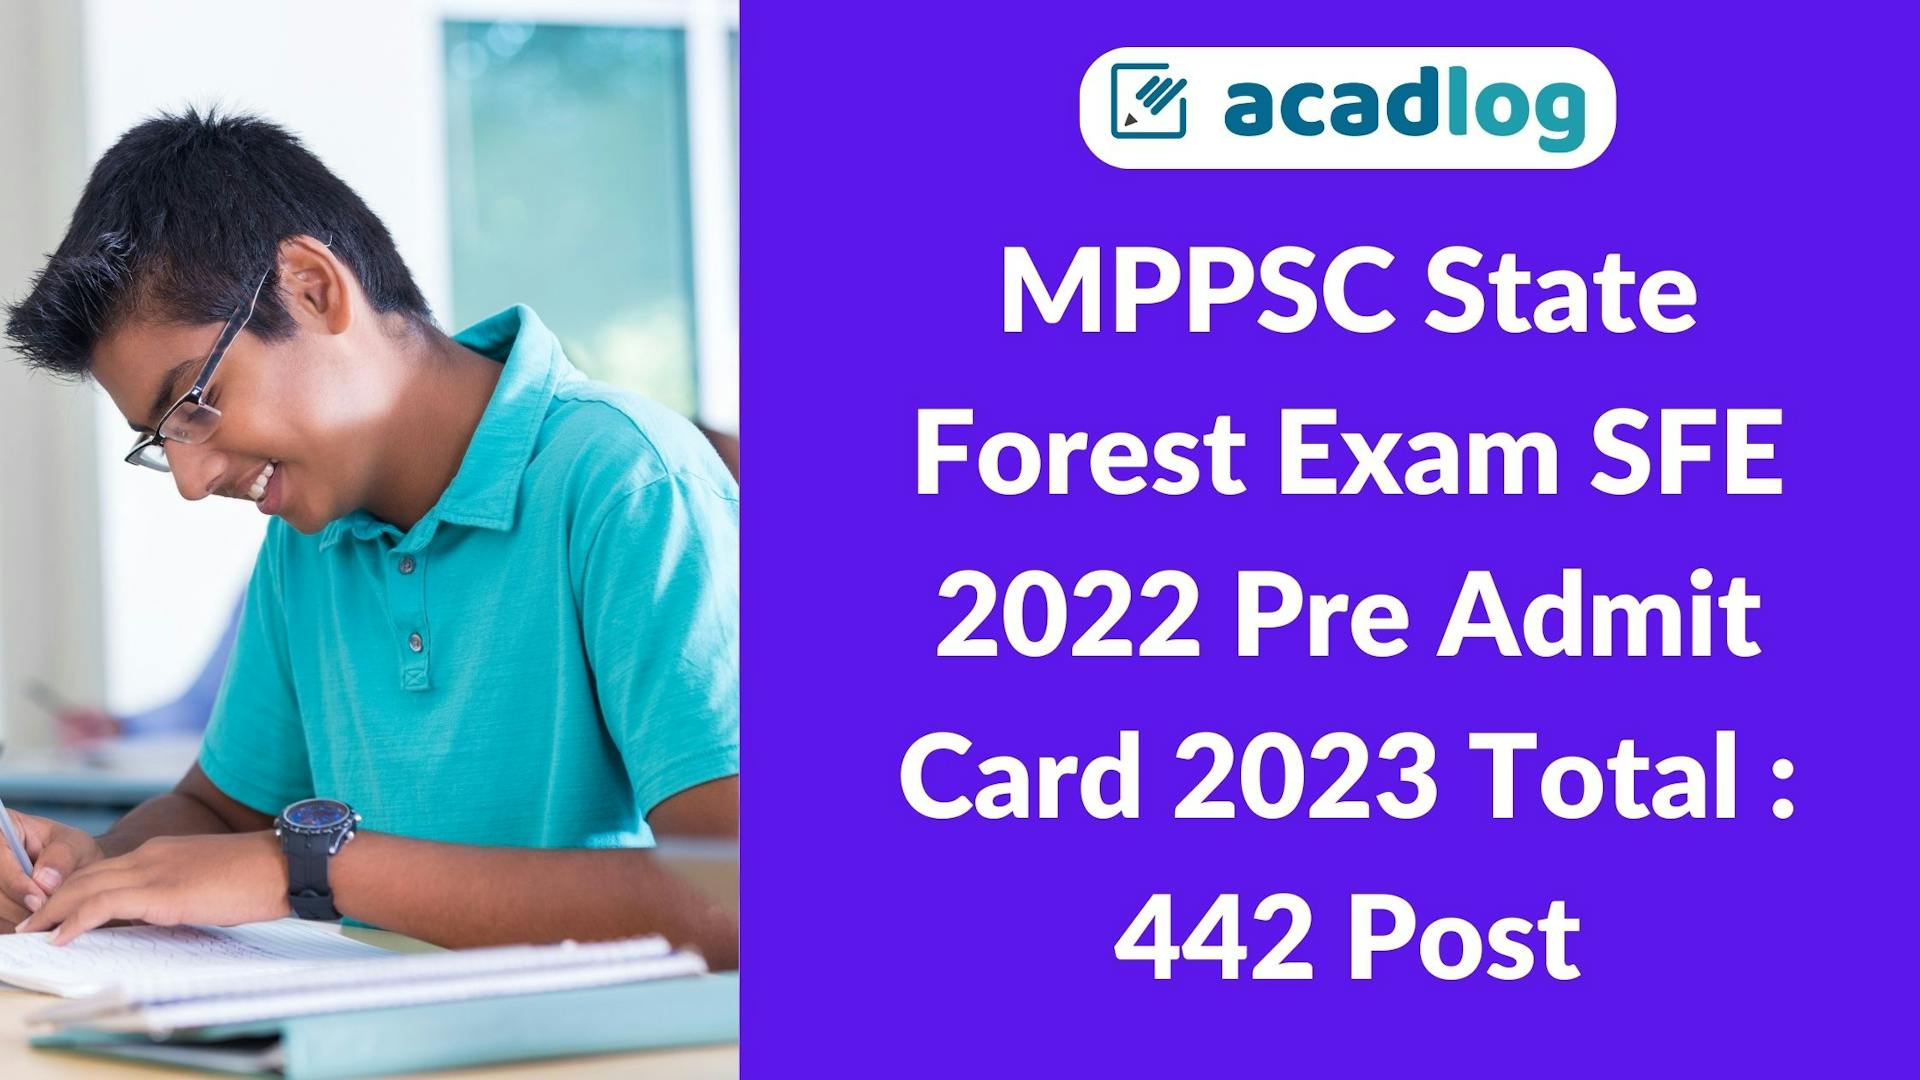 Madhya Pradesh MPPSC State Service Exam SSE, State Forest Exam SFE 2022 Pre Admit Card 2023